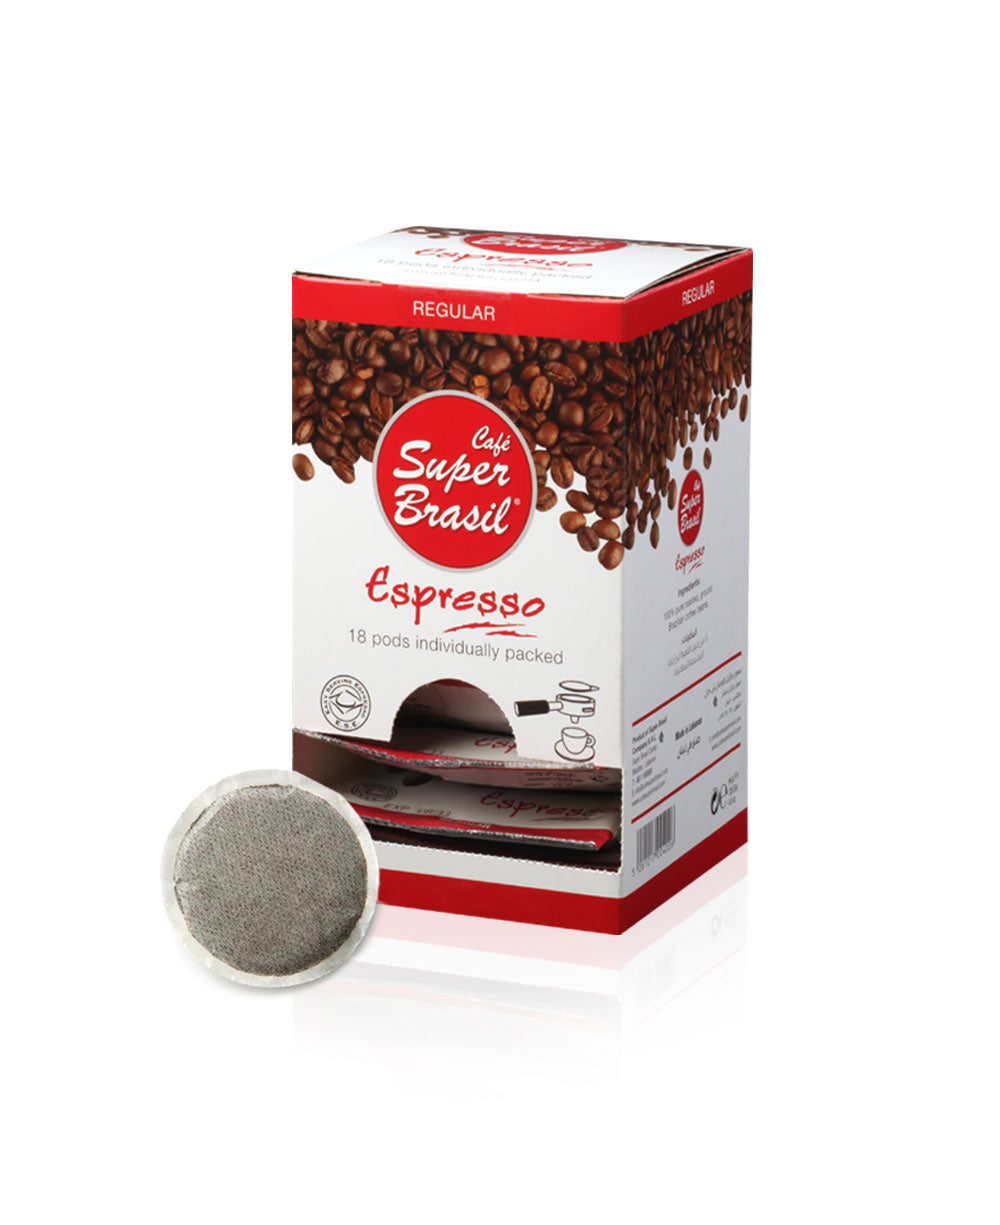 Café Super Brasil Espresso POD (Regular)